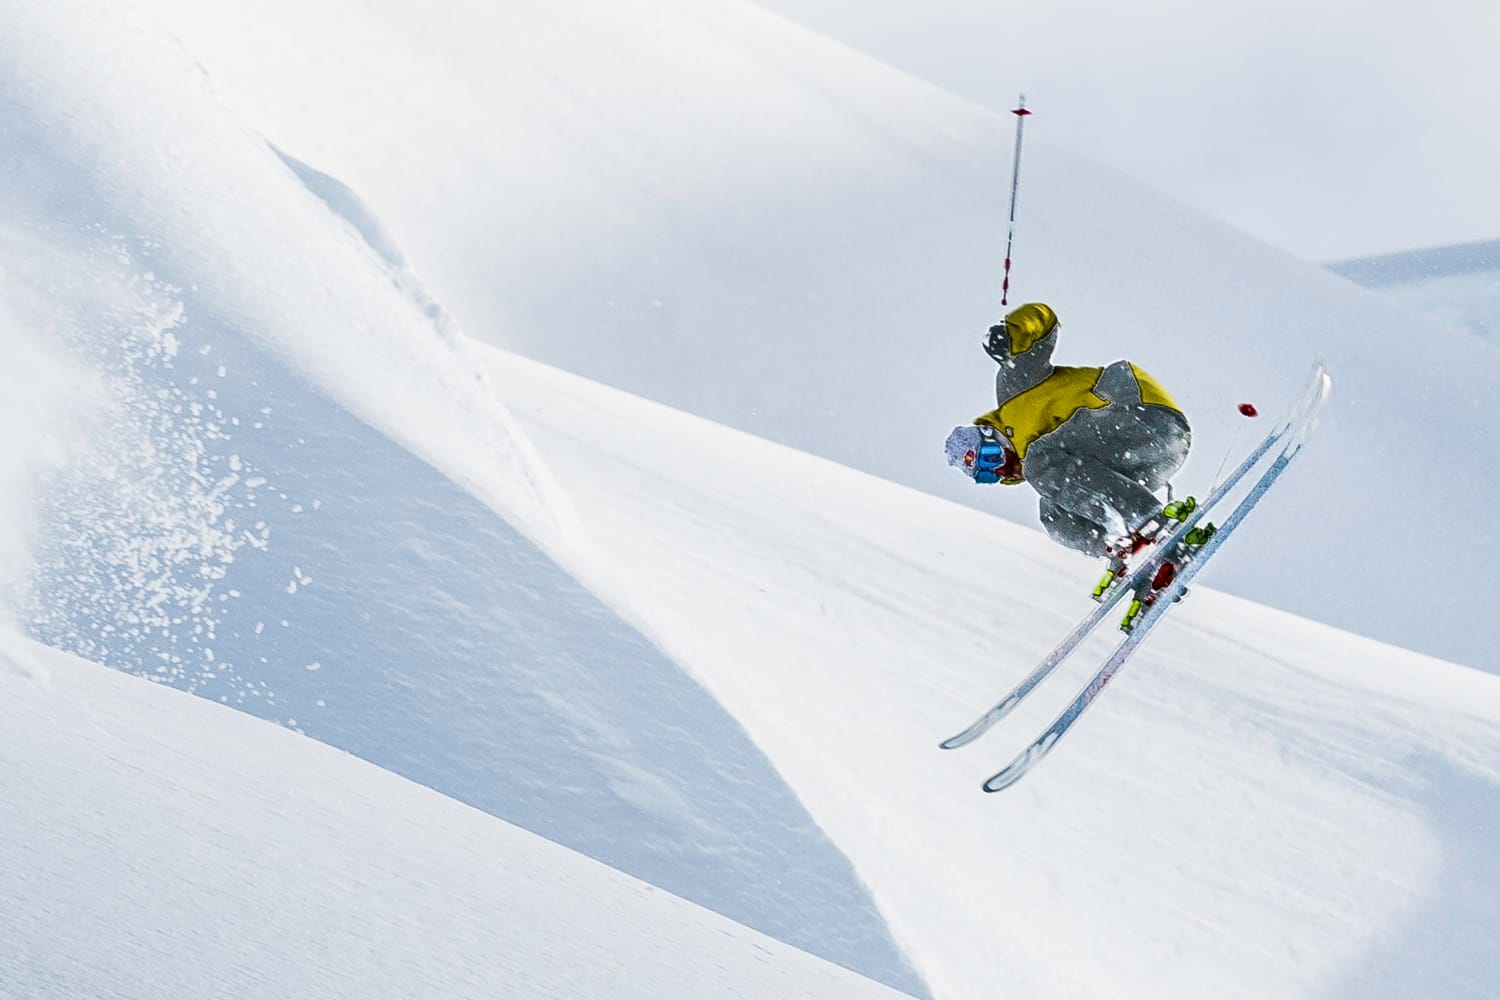 Nicholas Kirkwood on Instagram: “That apres-ski look turns slick